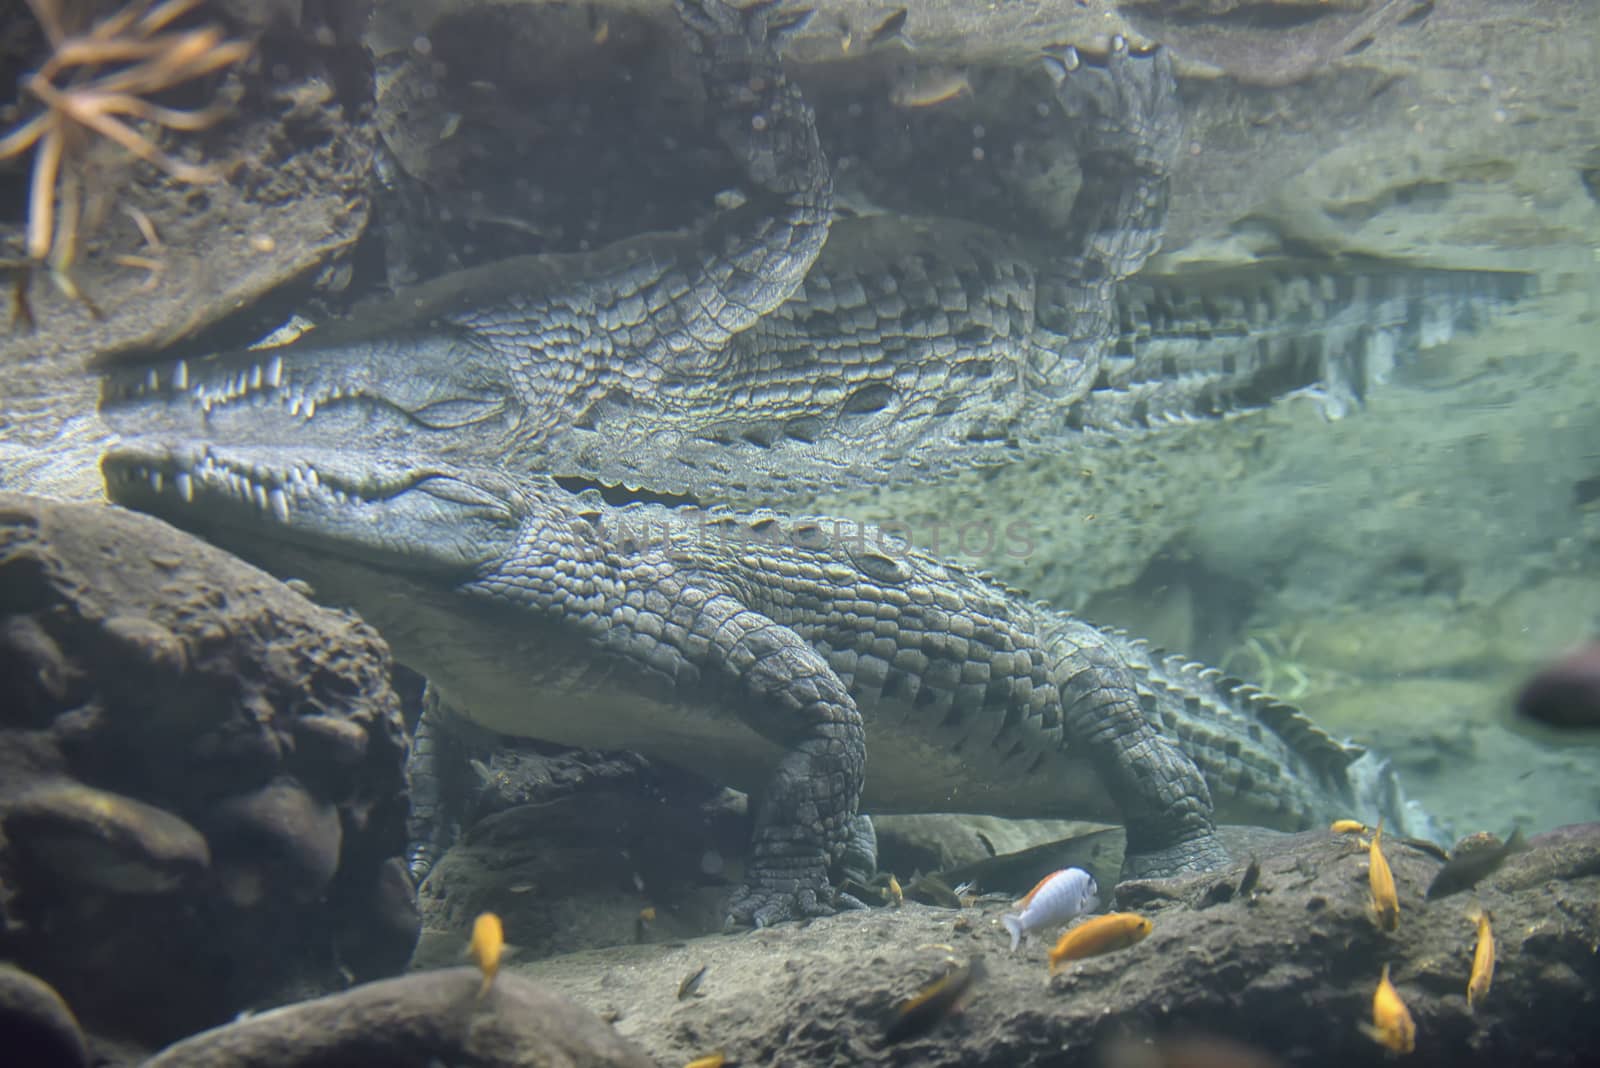 Crocodile swimming in clear water 